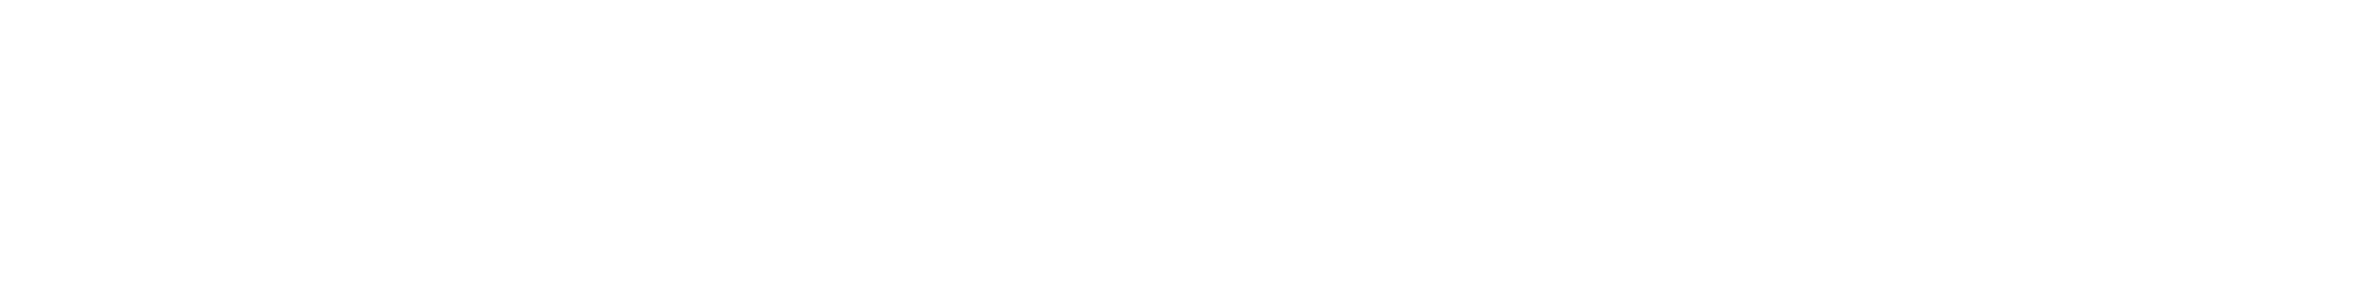 Sellen logo